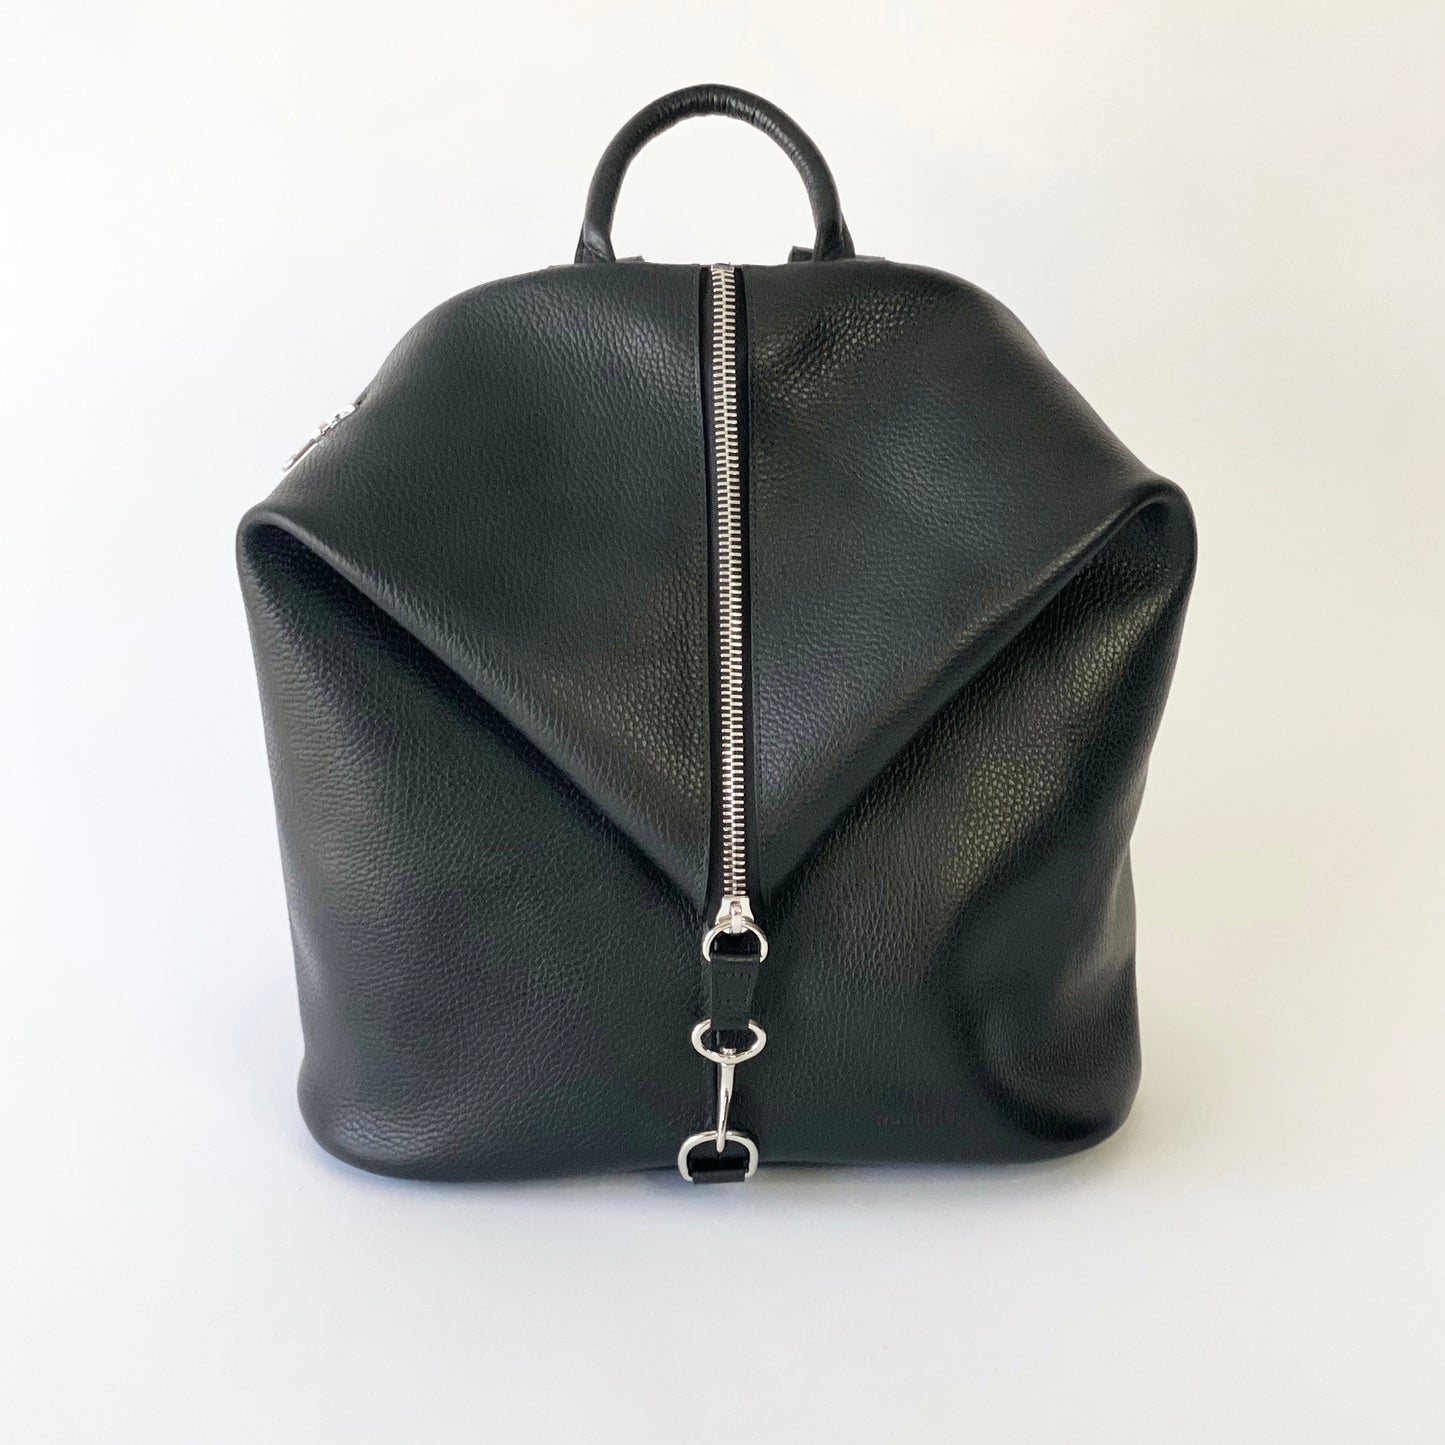 The Mercato Backpack in Black